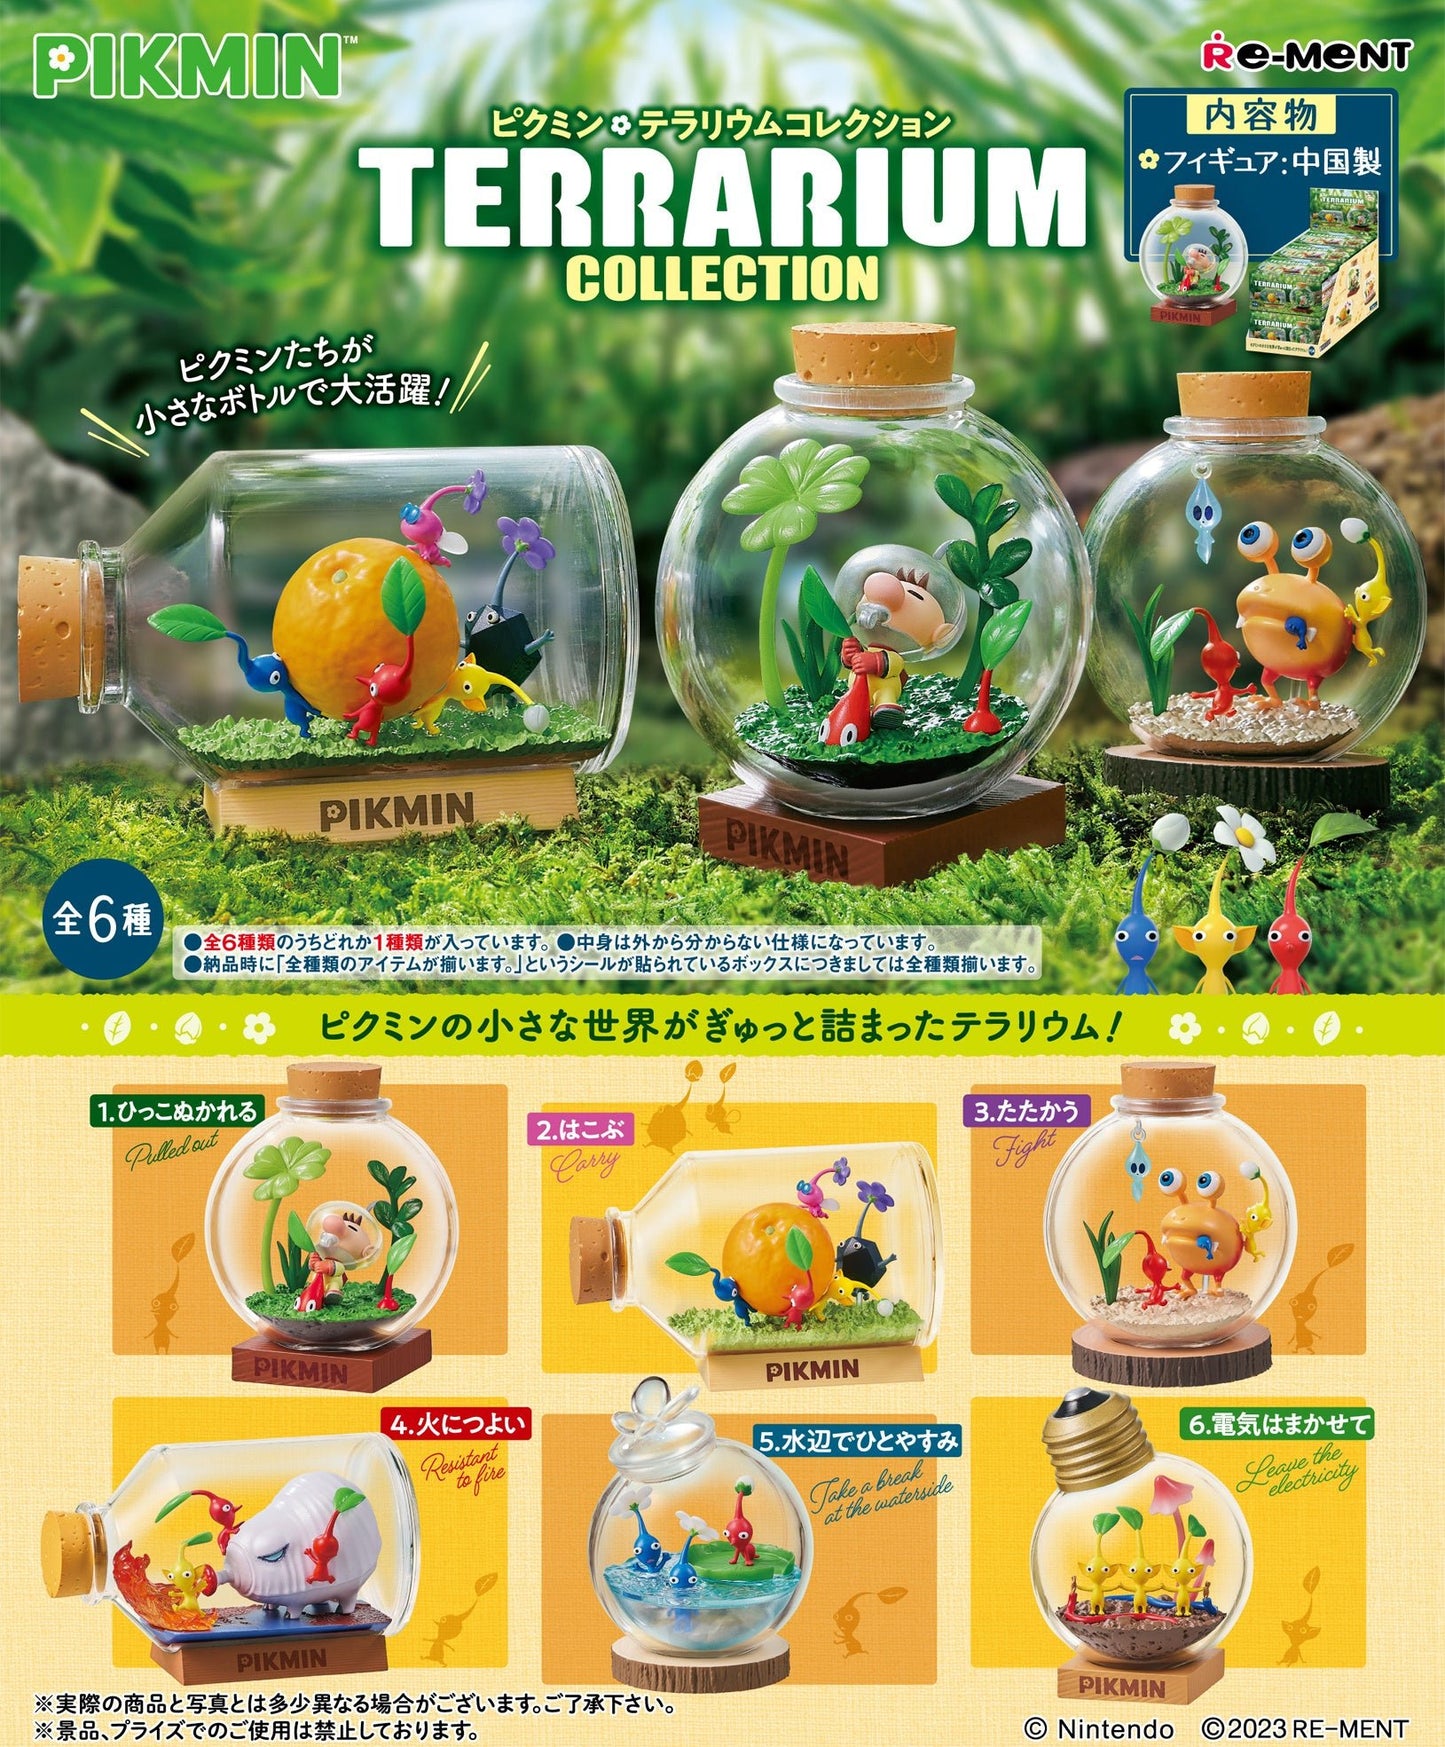 Re-Ment - Pikmin: Terrarium Collection: 1 Random Pull - Good Game Anime